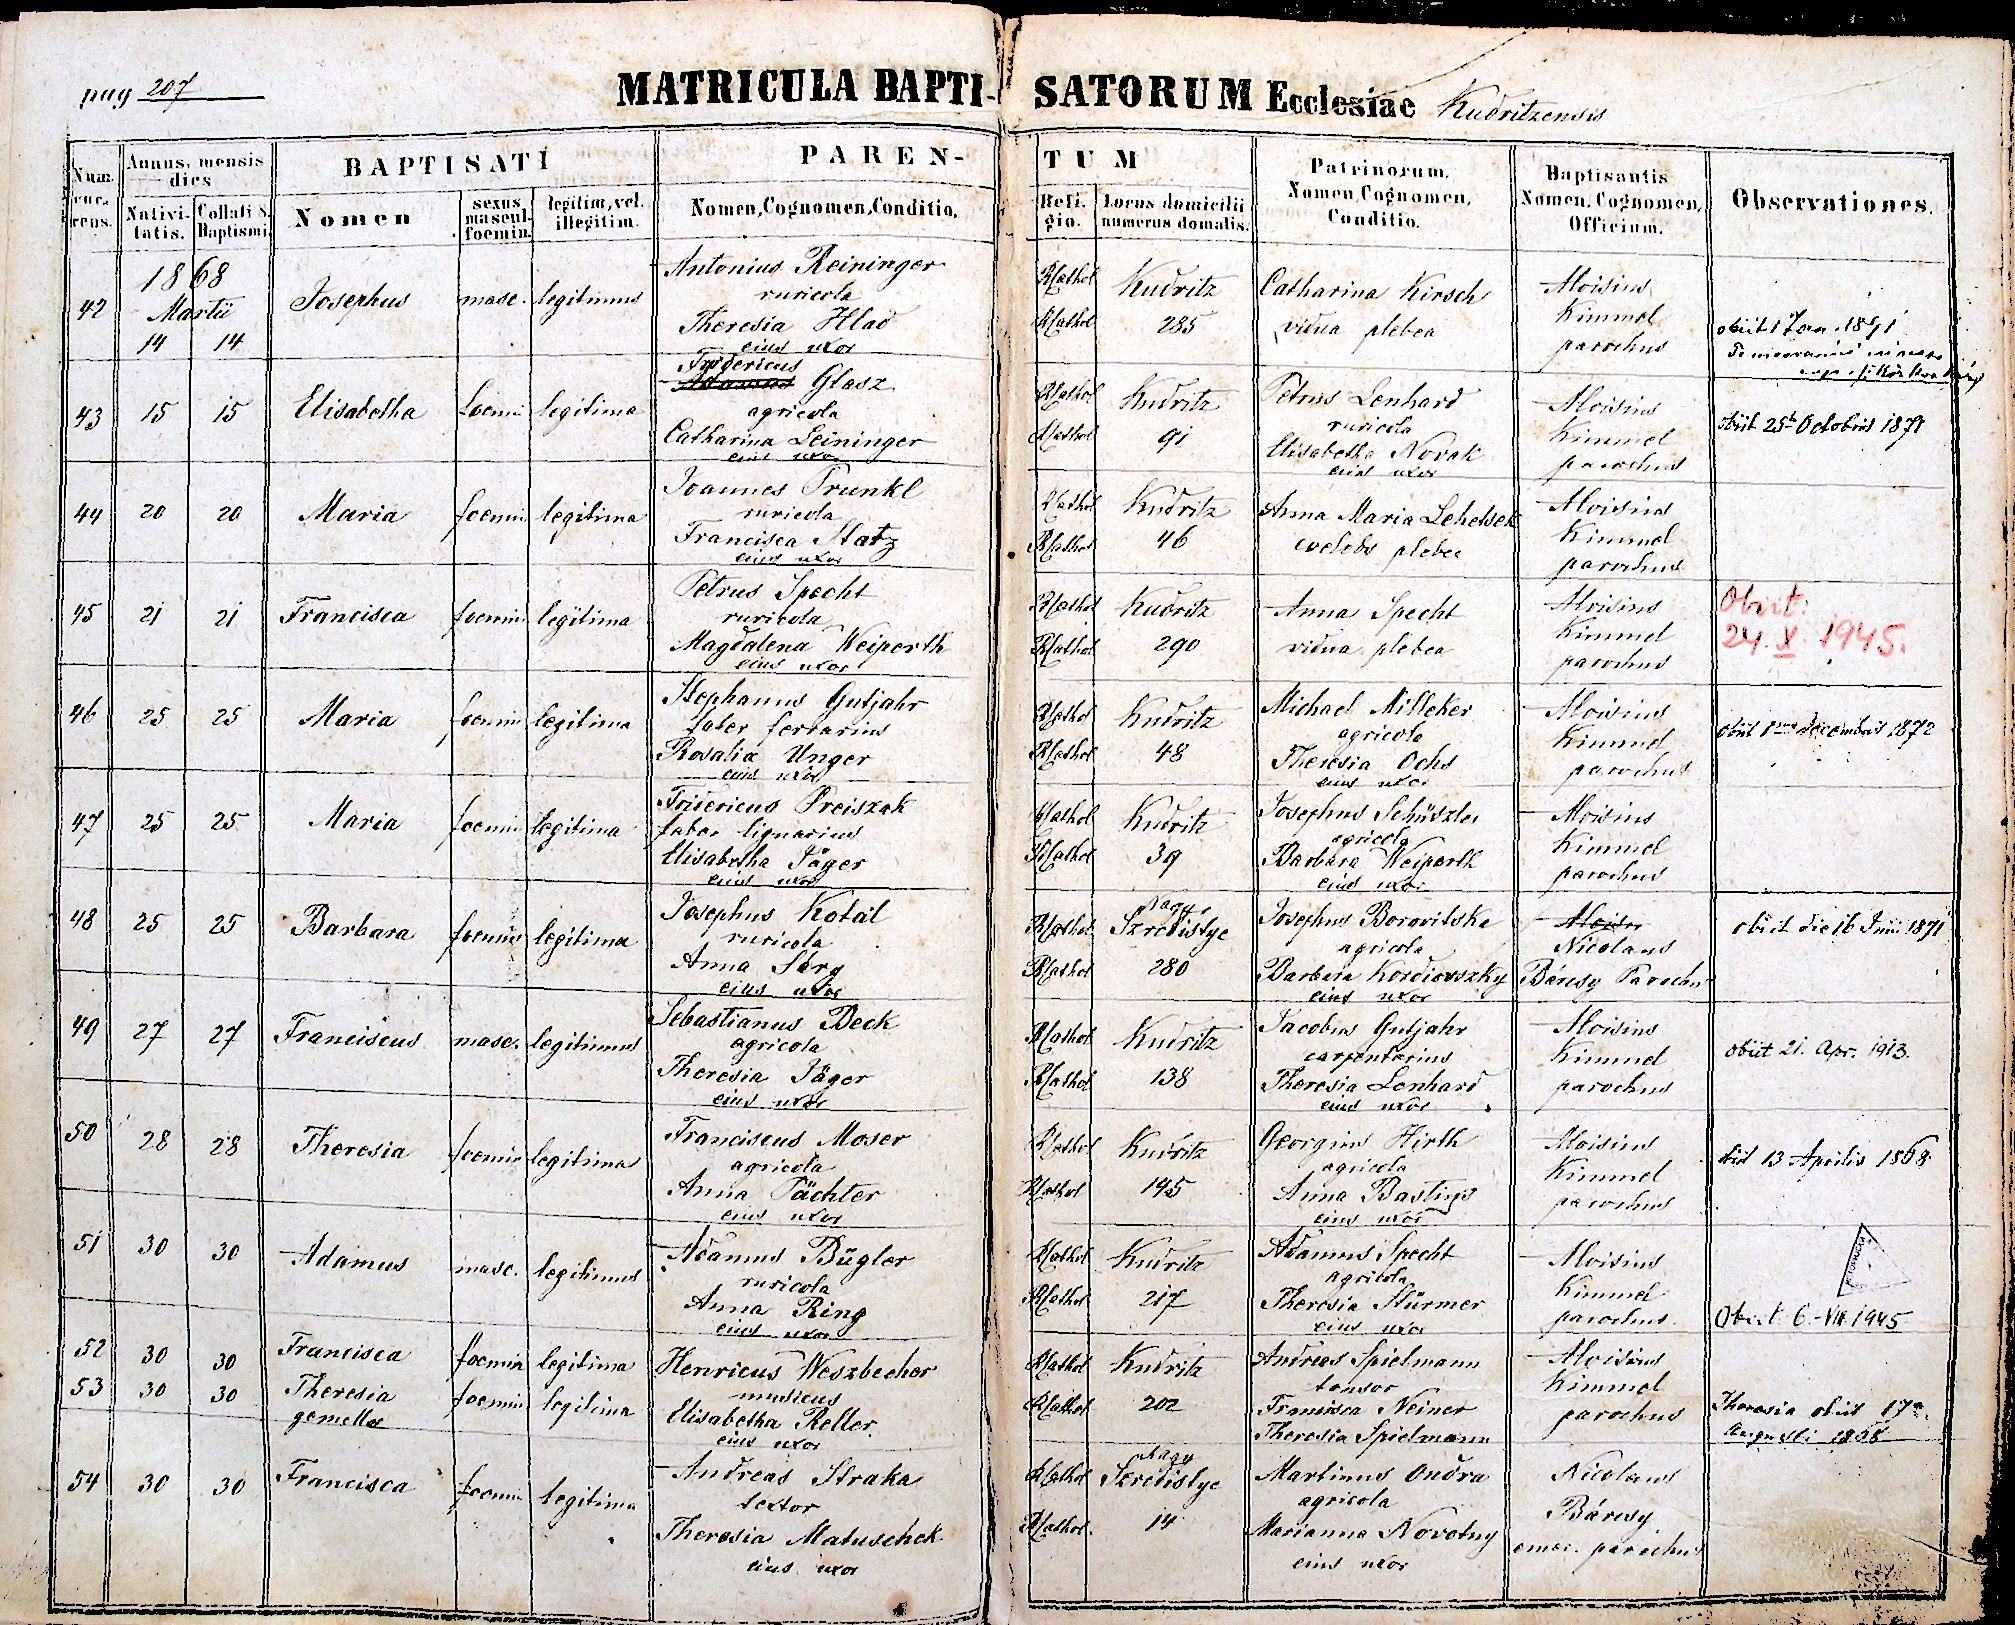 images/church_records/BIRTHS/1852-1870B/207